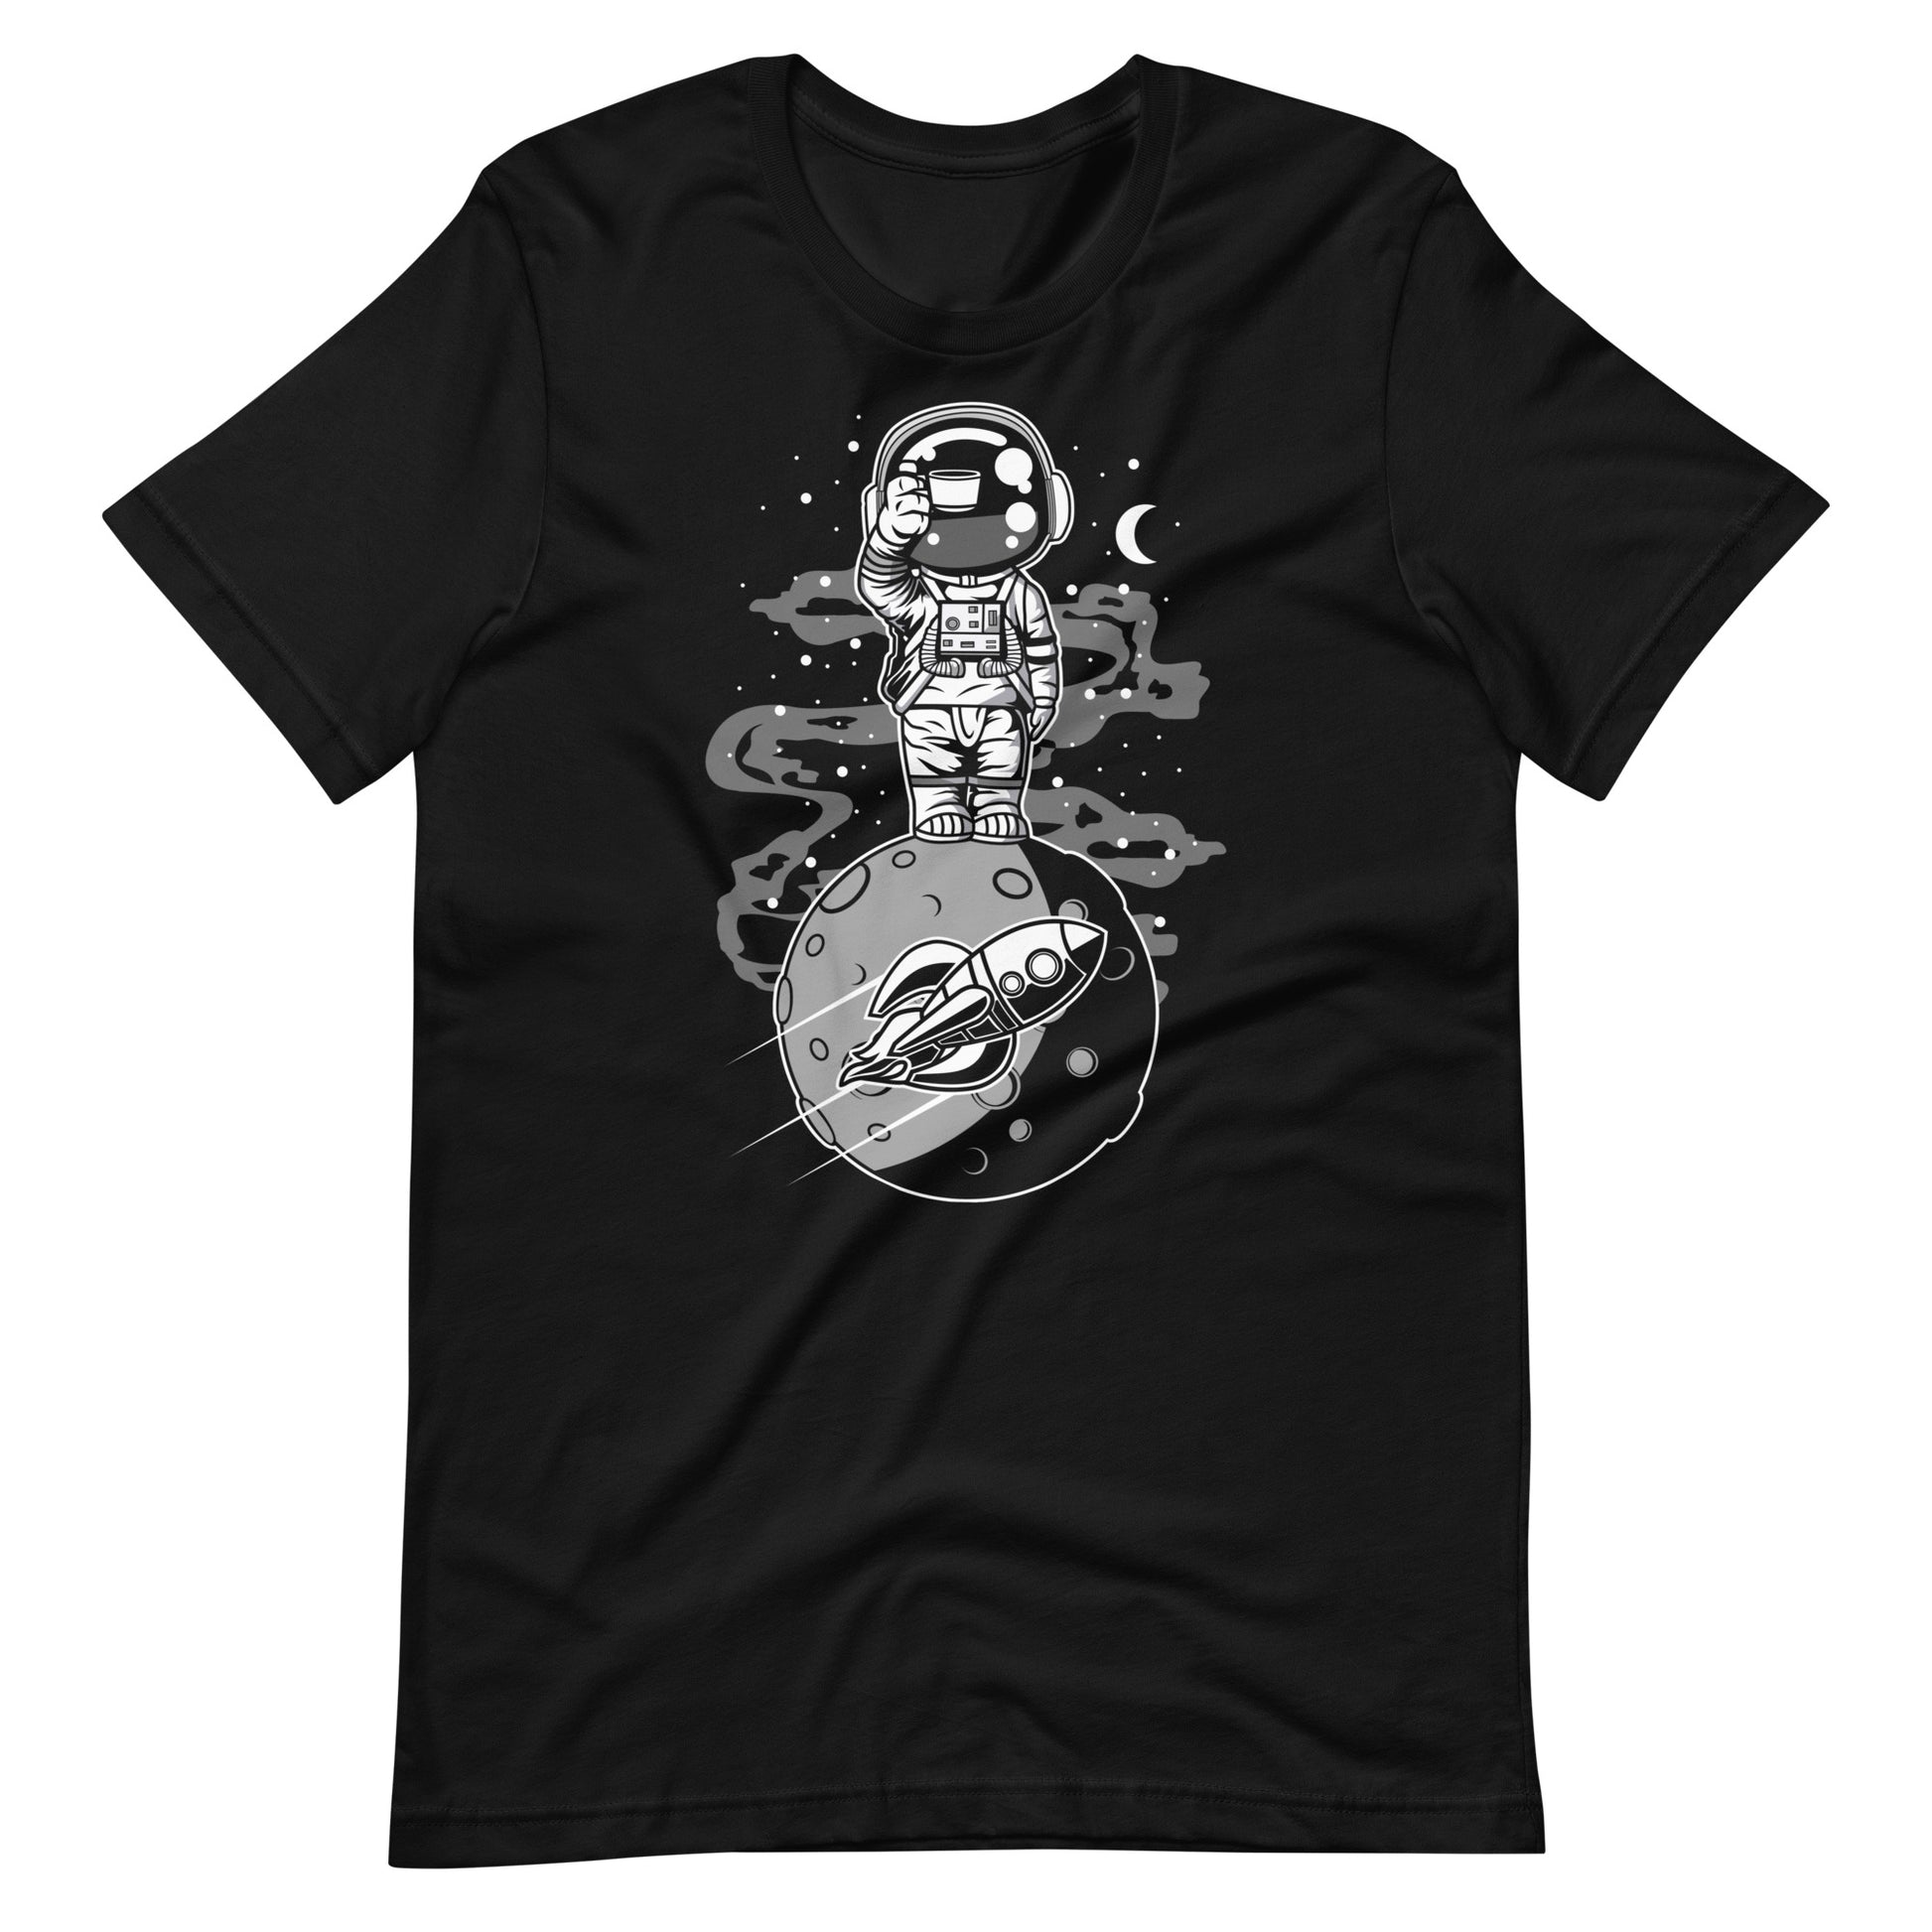 Astronaut Standing on the Moon - Men's t-shirt - Black Front